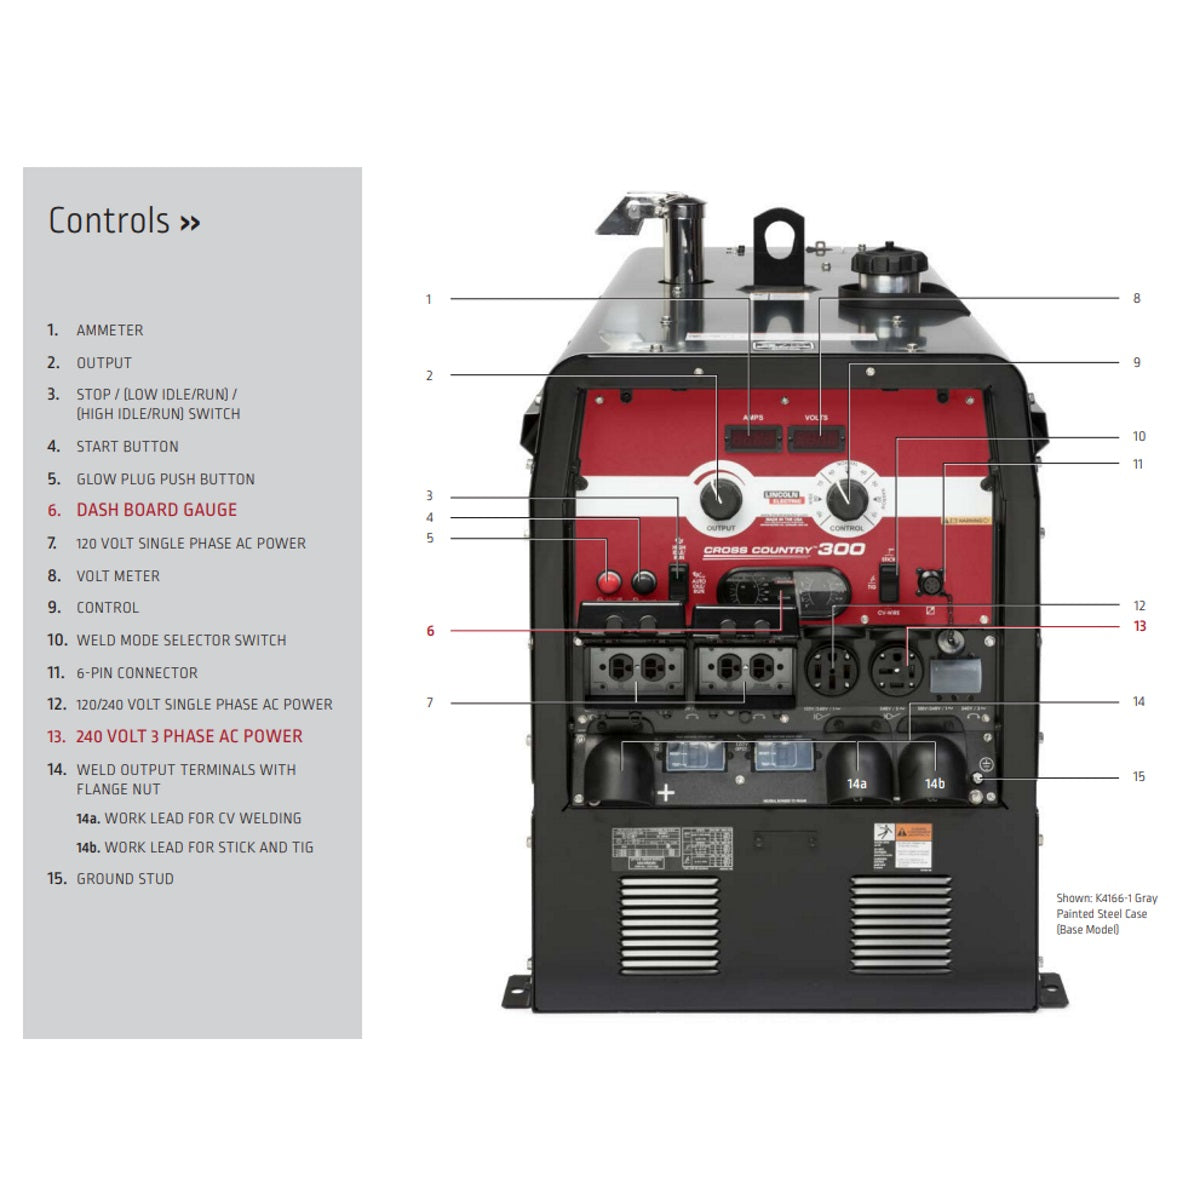 Lincoln Cross Country 300 Kubota CC/CV Welder Generator w/Wireless Remote (K4166-2)